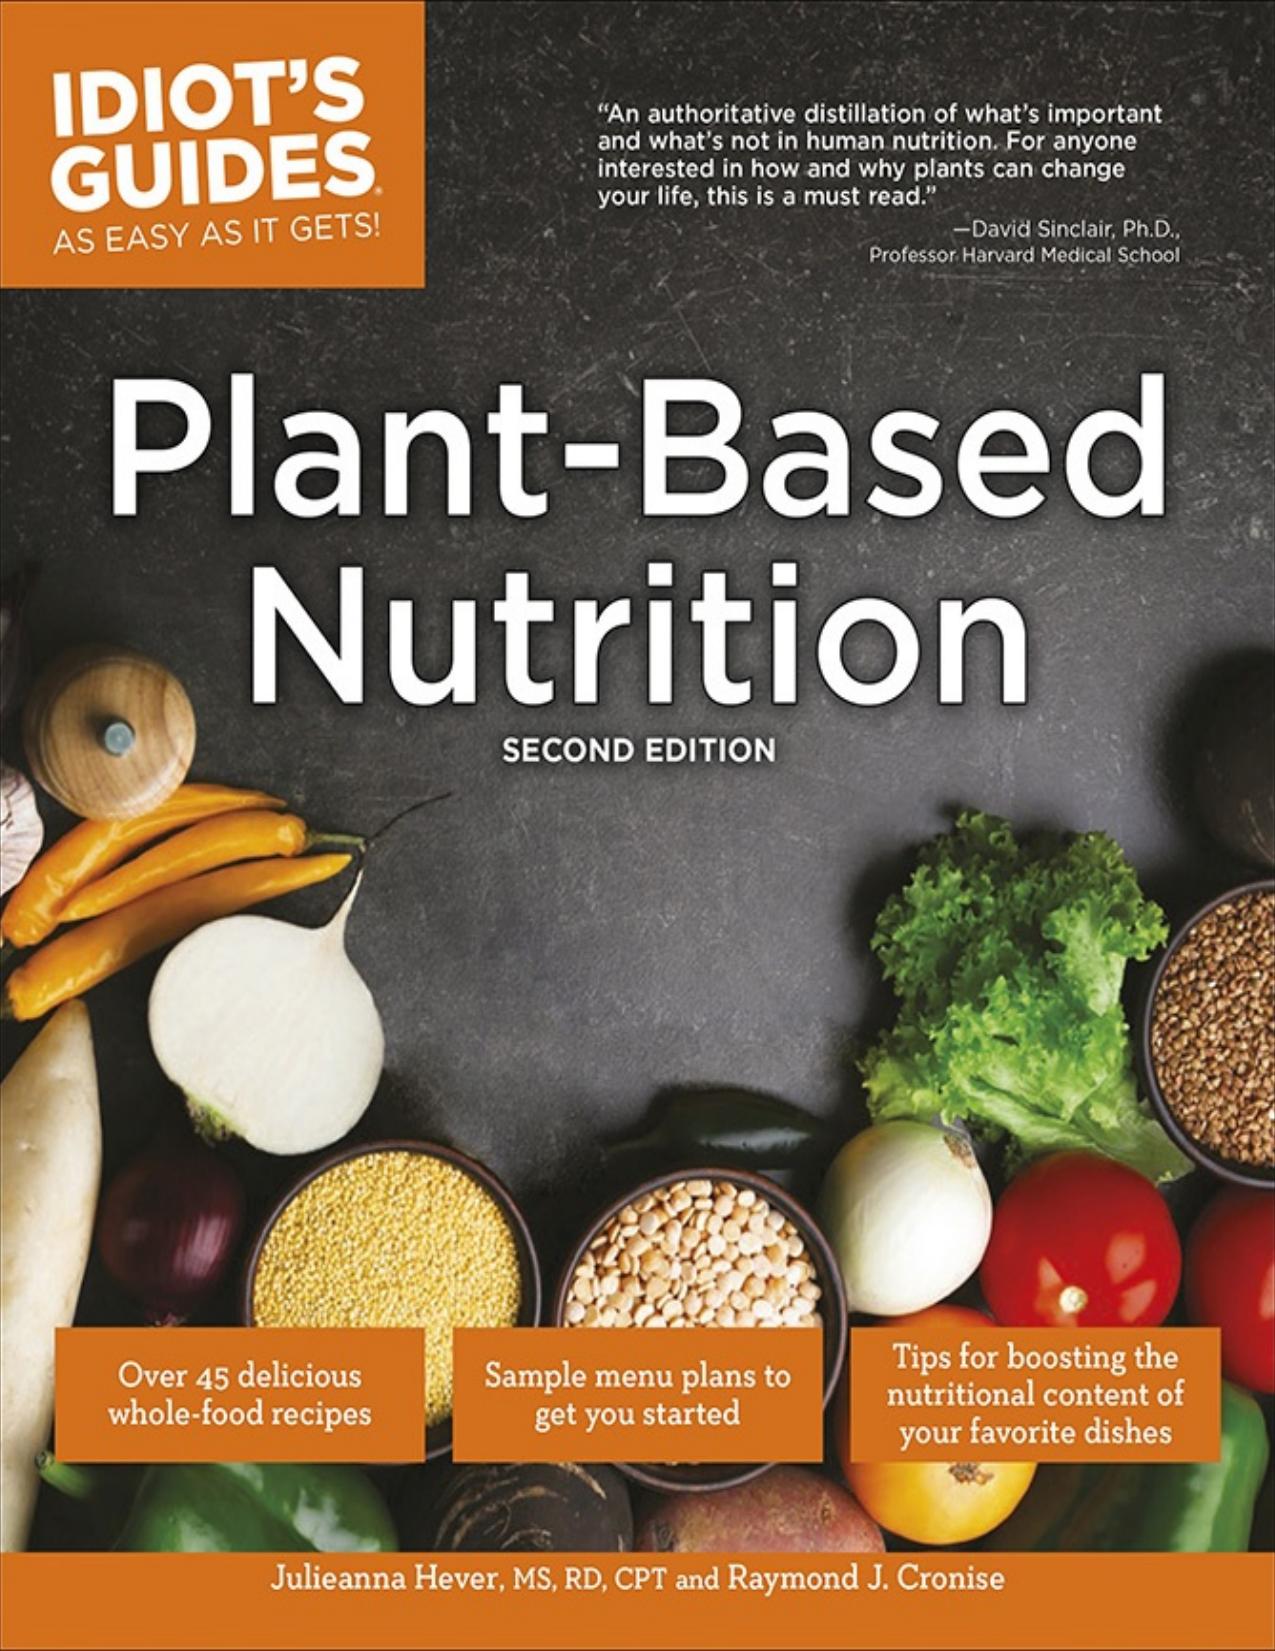 Plant-Based Nutrition - PDFDrive.com